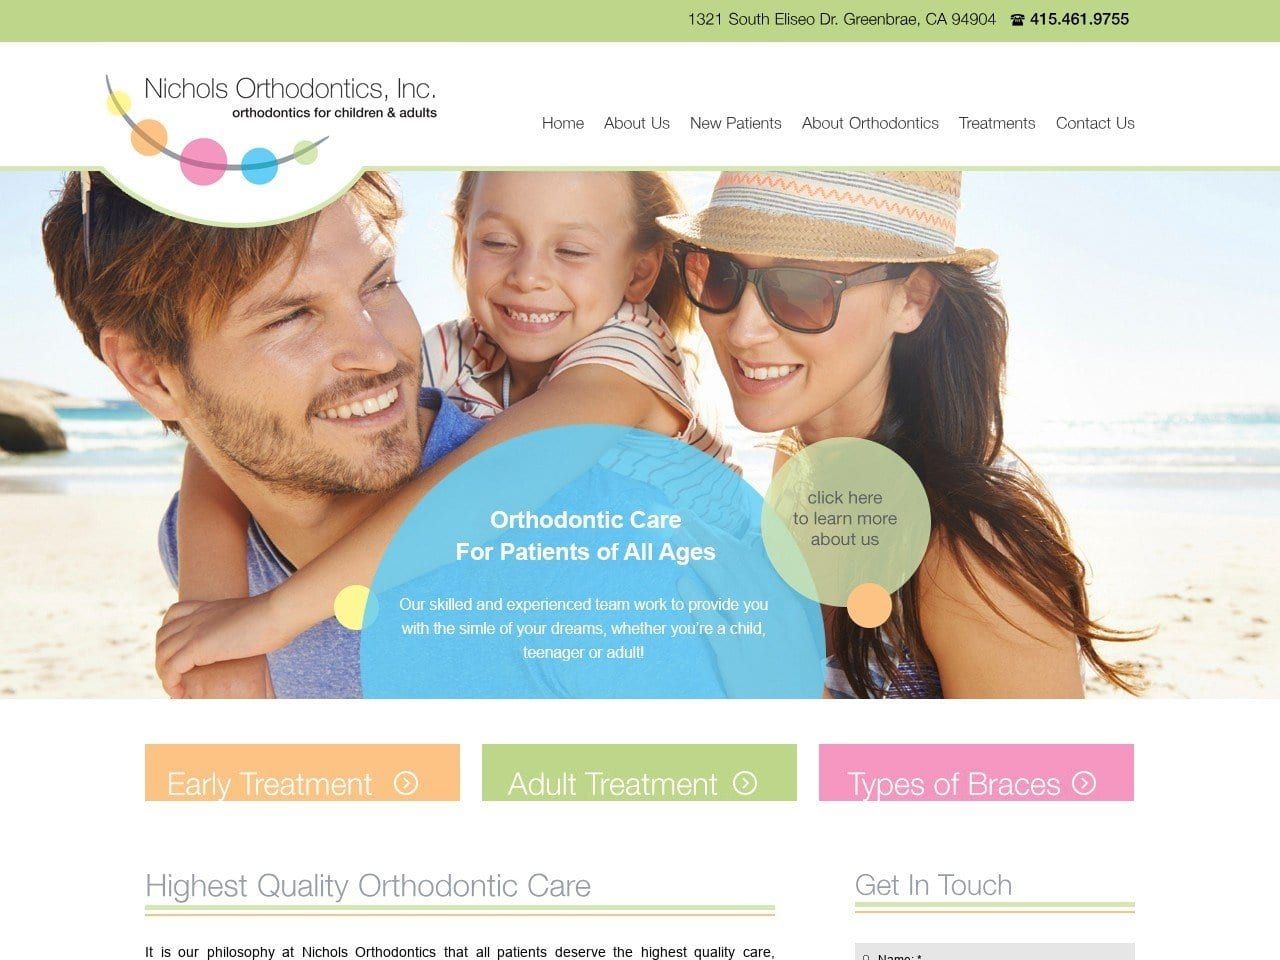 Nichols Orthodontics Inc. Website Screenshot from nicholsorthodontics.com